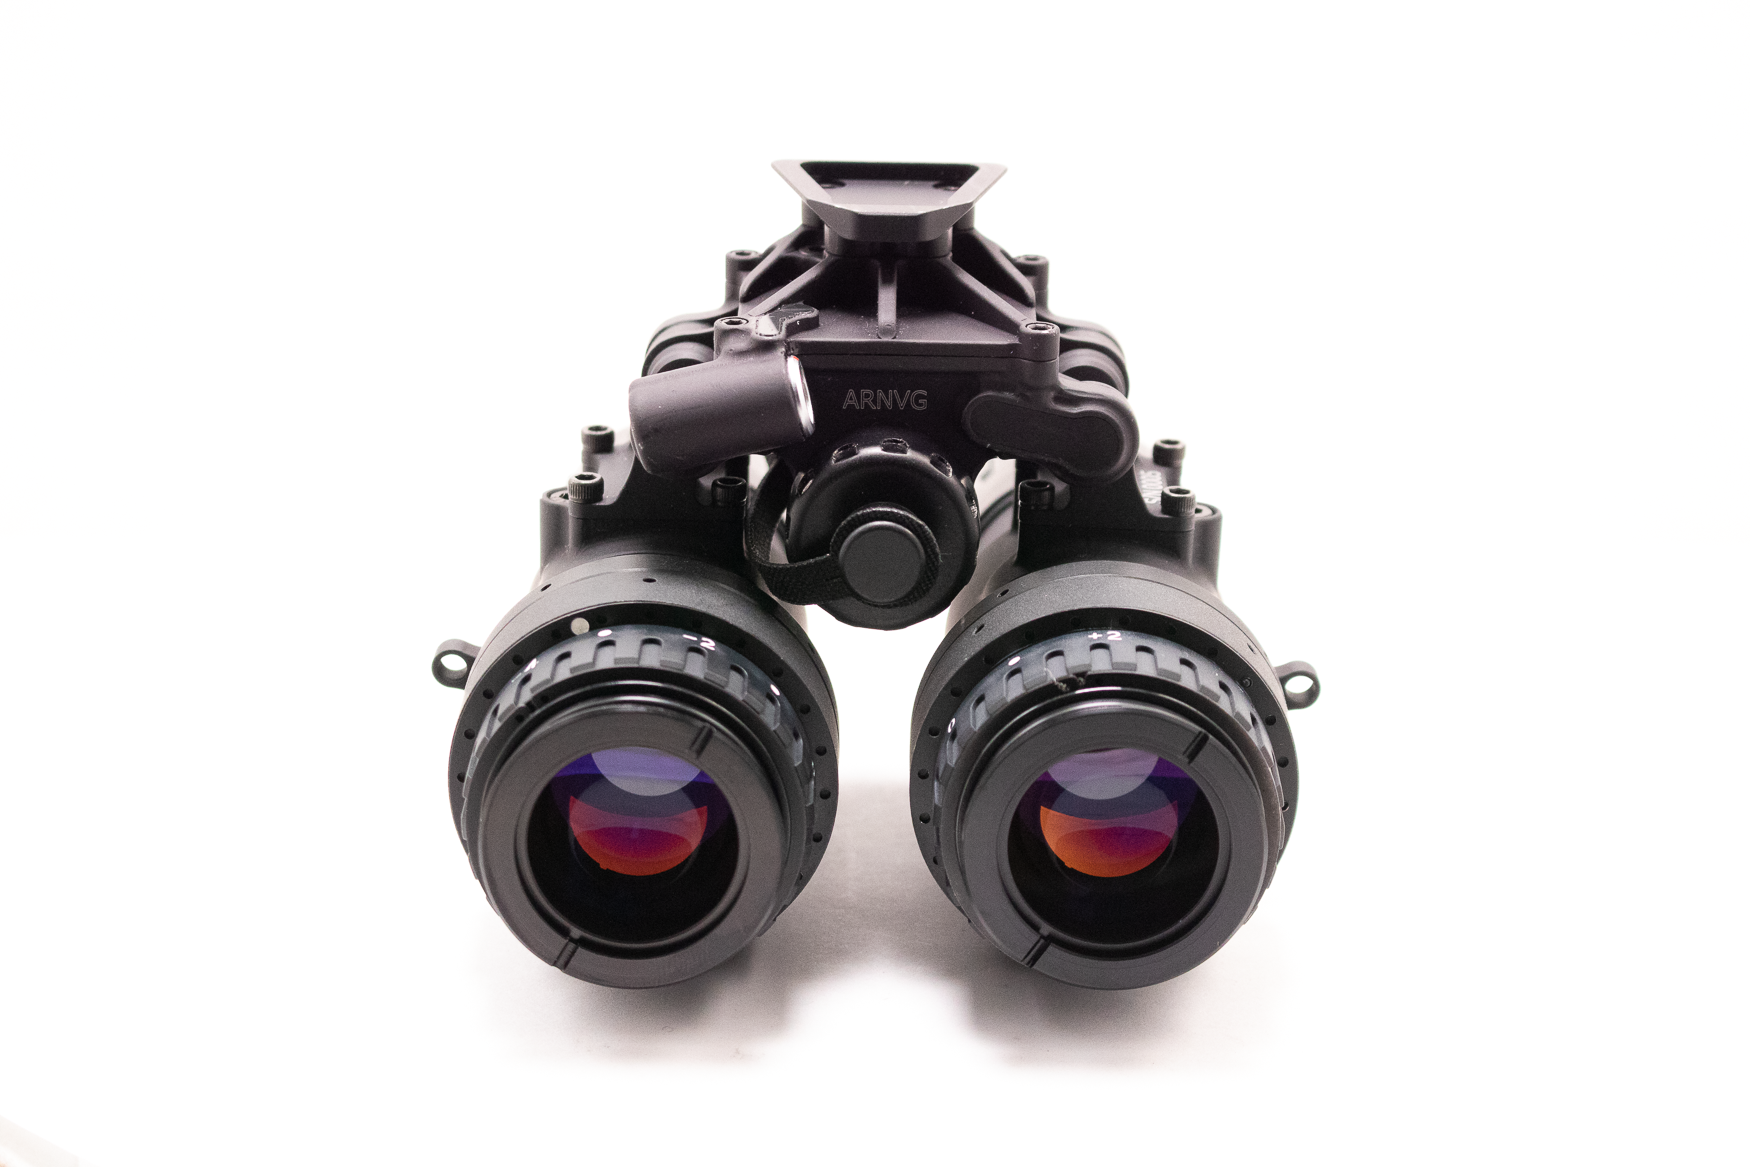 ARNVG (Articulating Ruggedized Night Vision Goggle – Killer